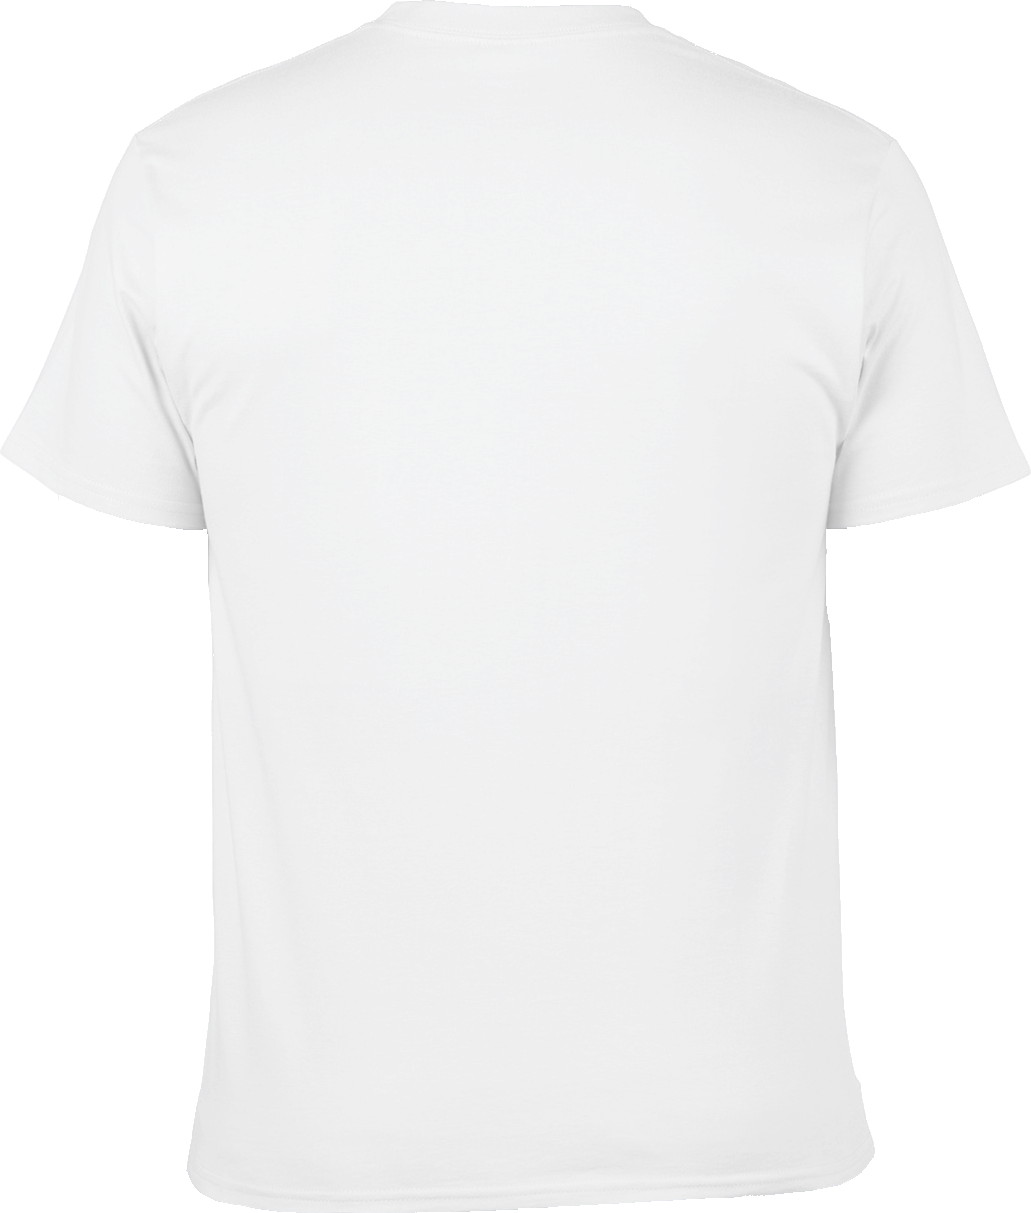 Avicii DJ Series T-Shirt (White) review and price